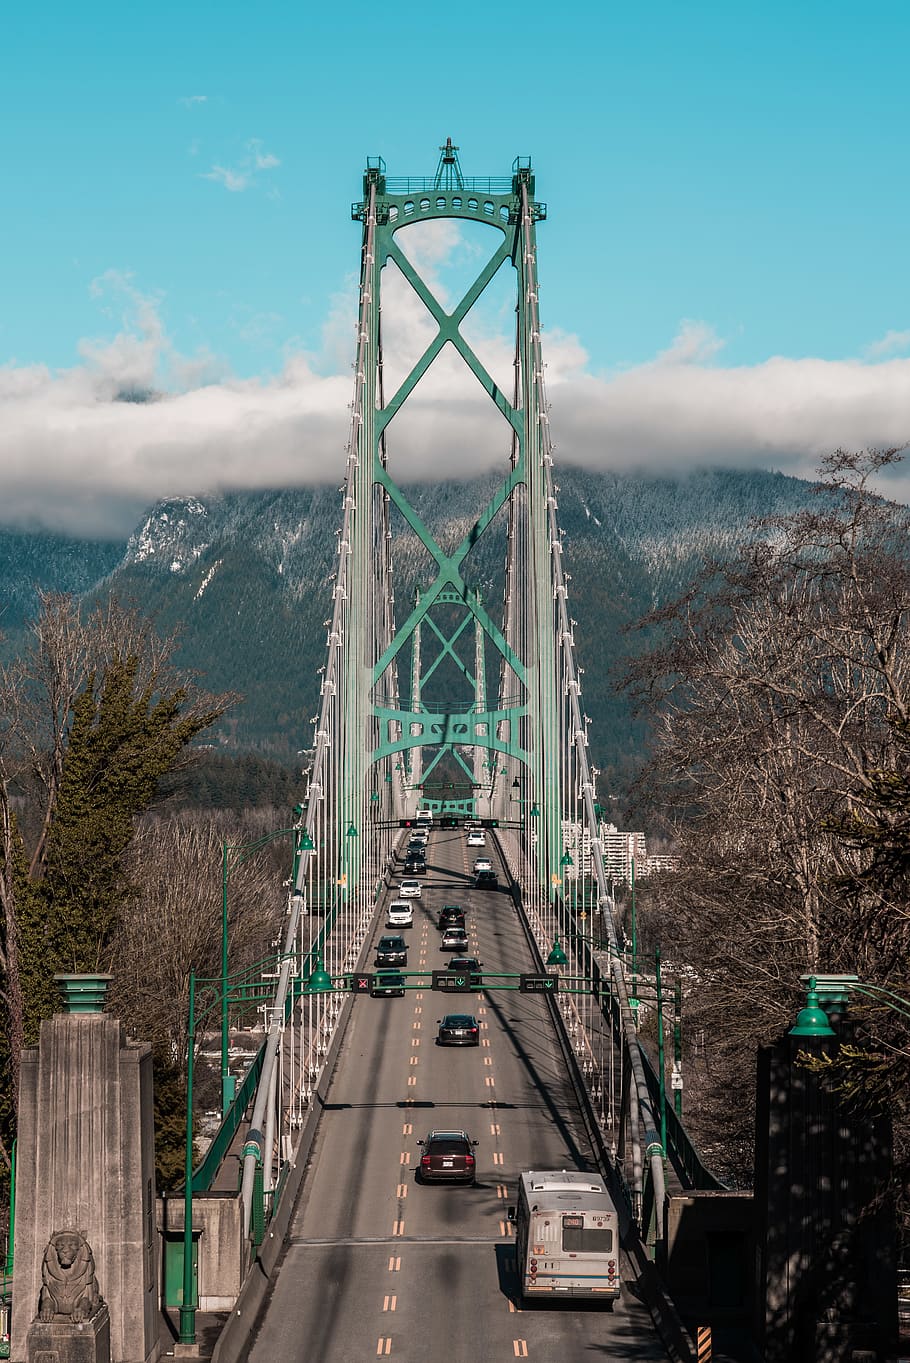 Lions Gate Bridge Suspension bridge in Vancouver, Canada, transportation